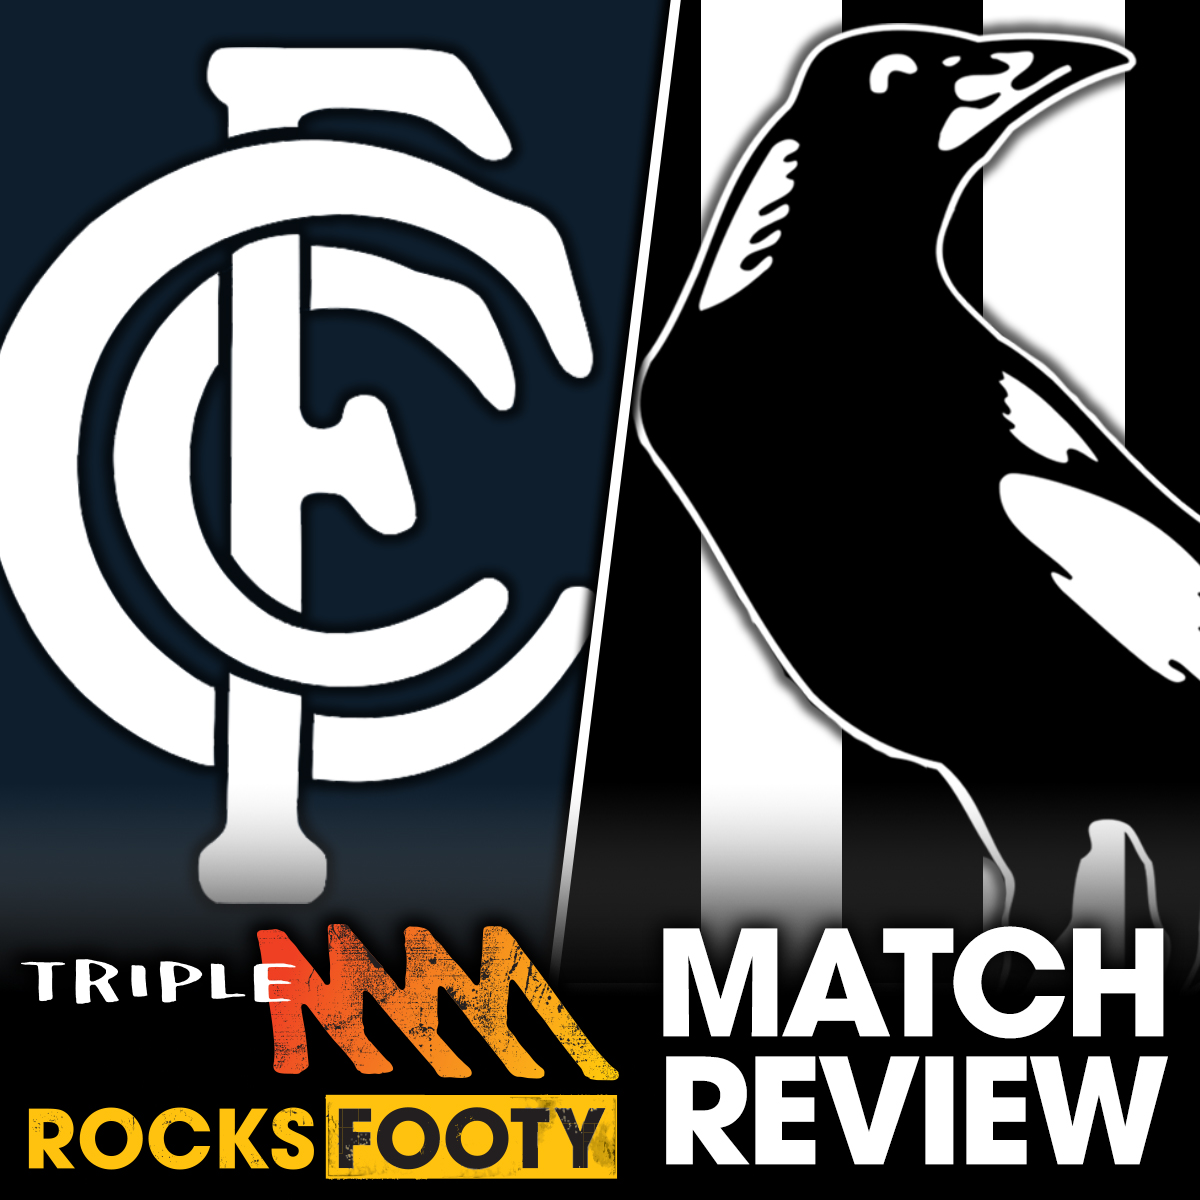 Carlton vs Collingwood match review